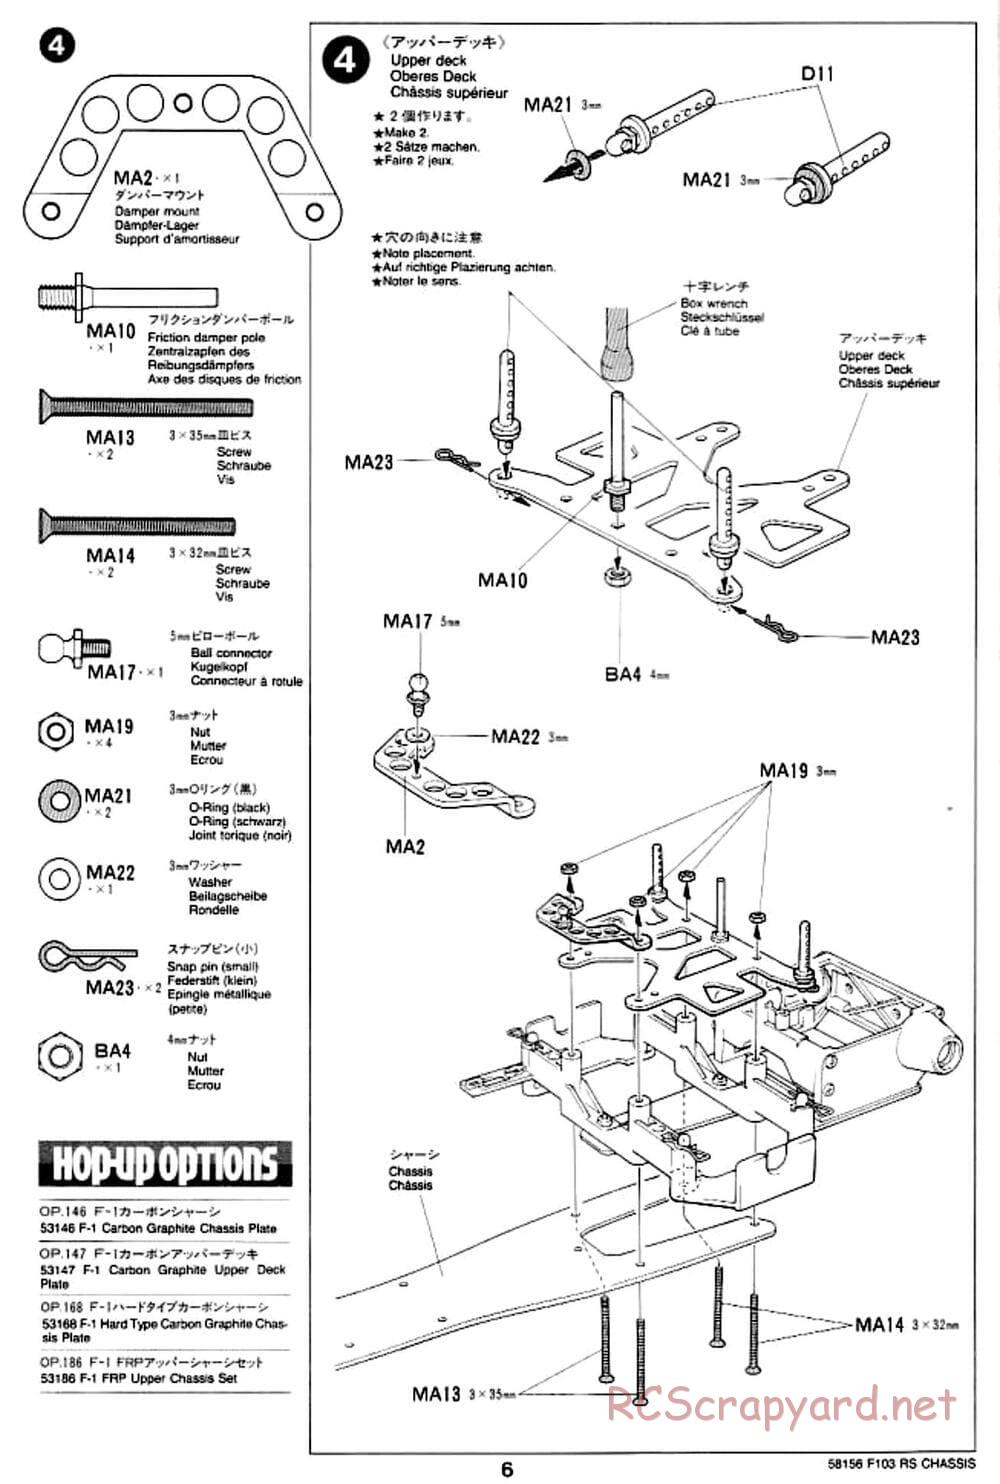 Tamiya - F103RS Chassis - Manual - Page 6